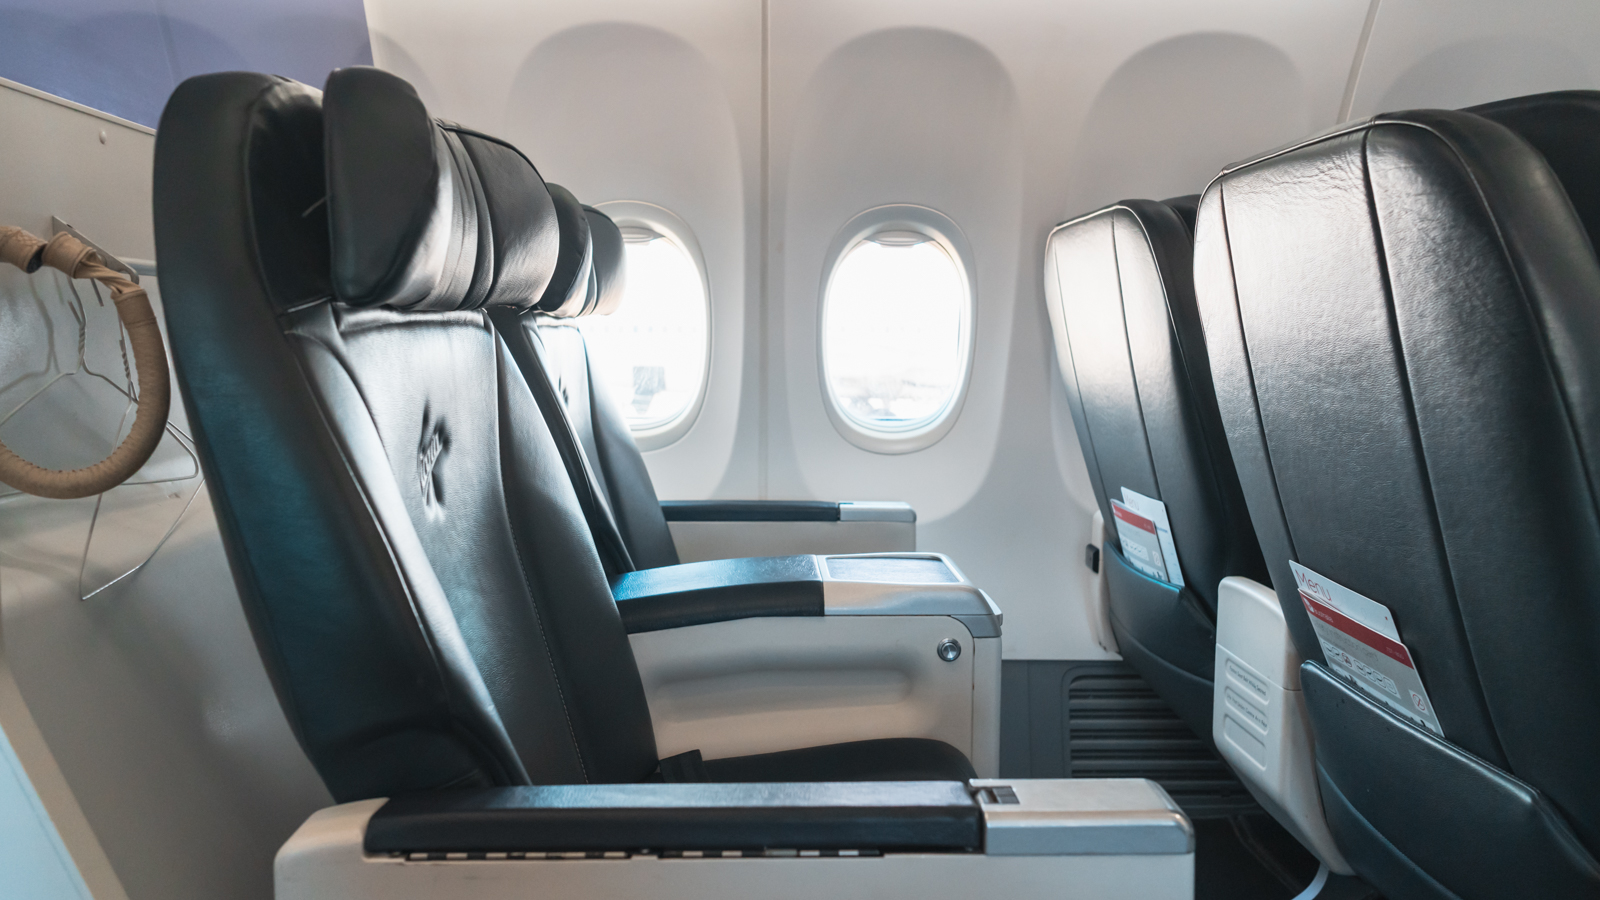 Virgin Australia 737 Business Class Review 8 - Point Hacks by Brandon Loo